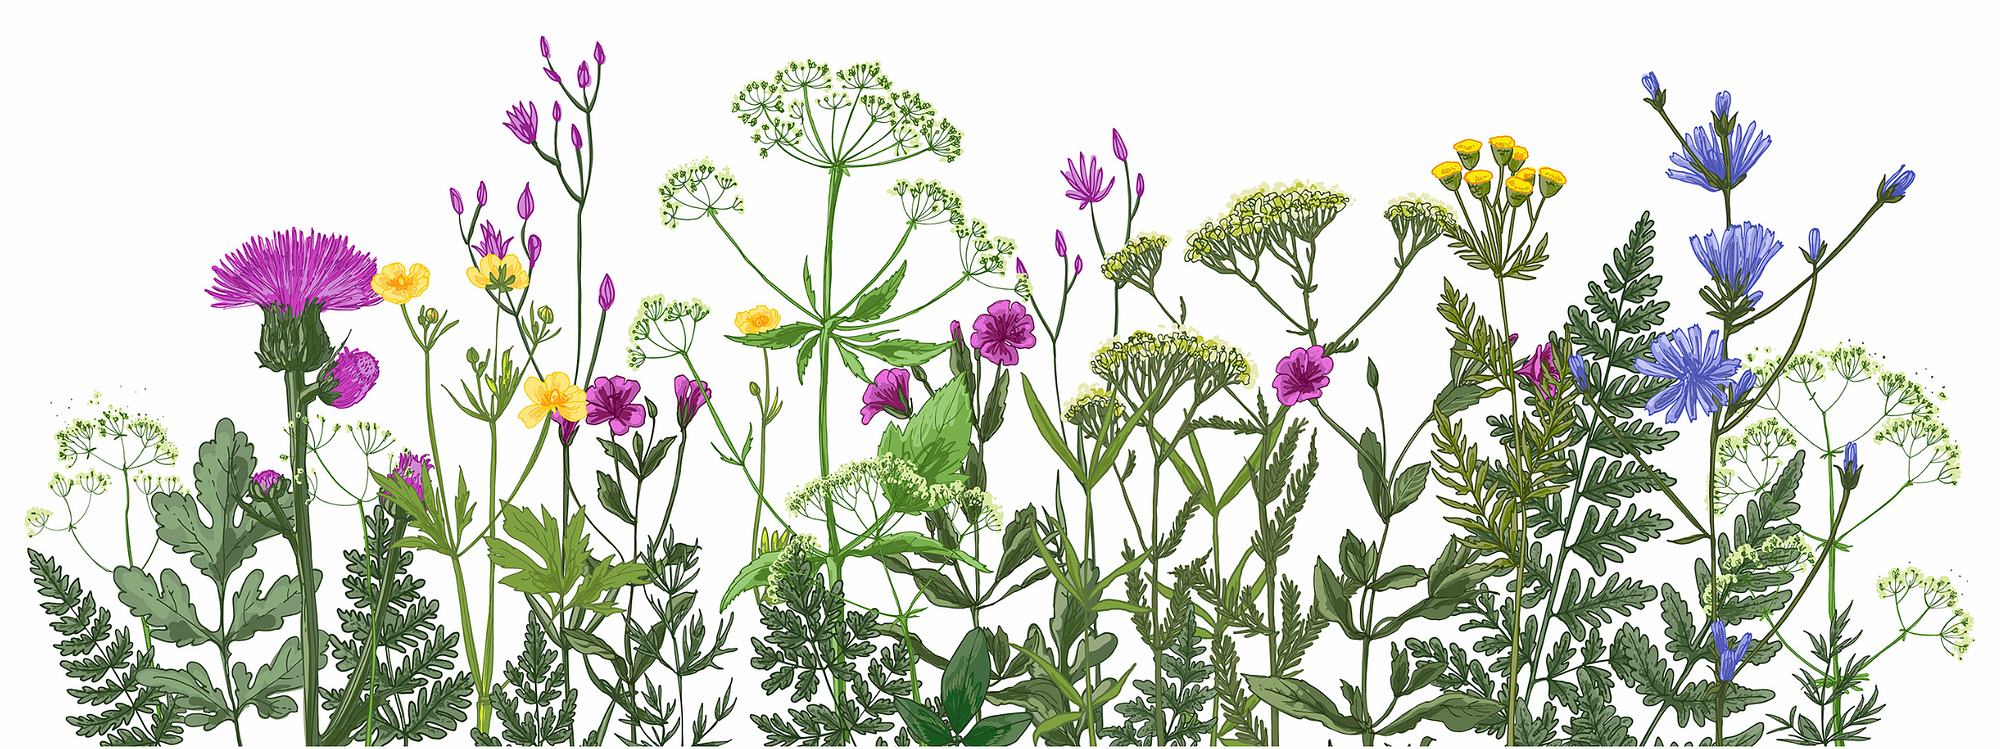 3 Dreamy Ways Herbs & Flowers Can Elevate Your Smoke Sesh, by Ilana Dadras